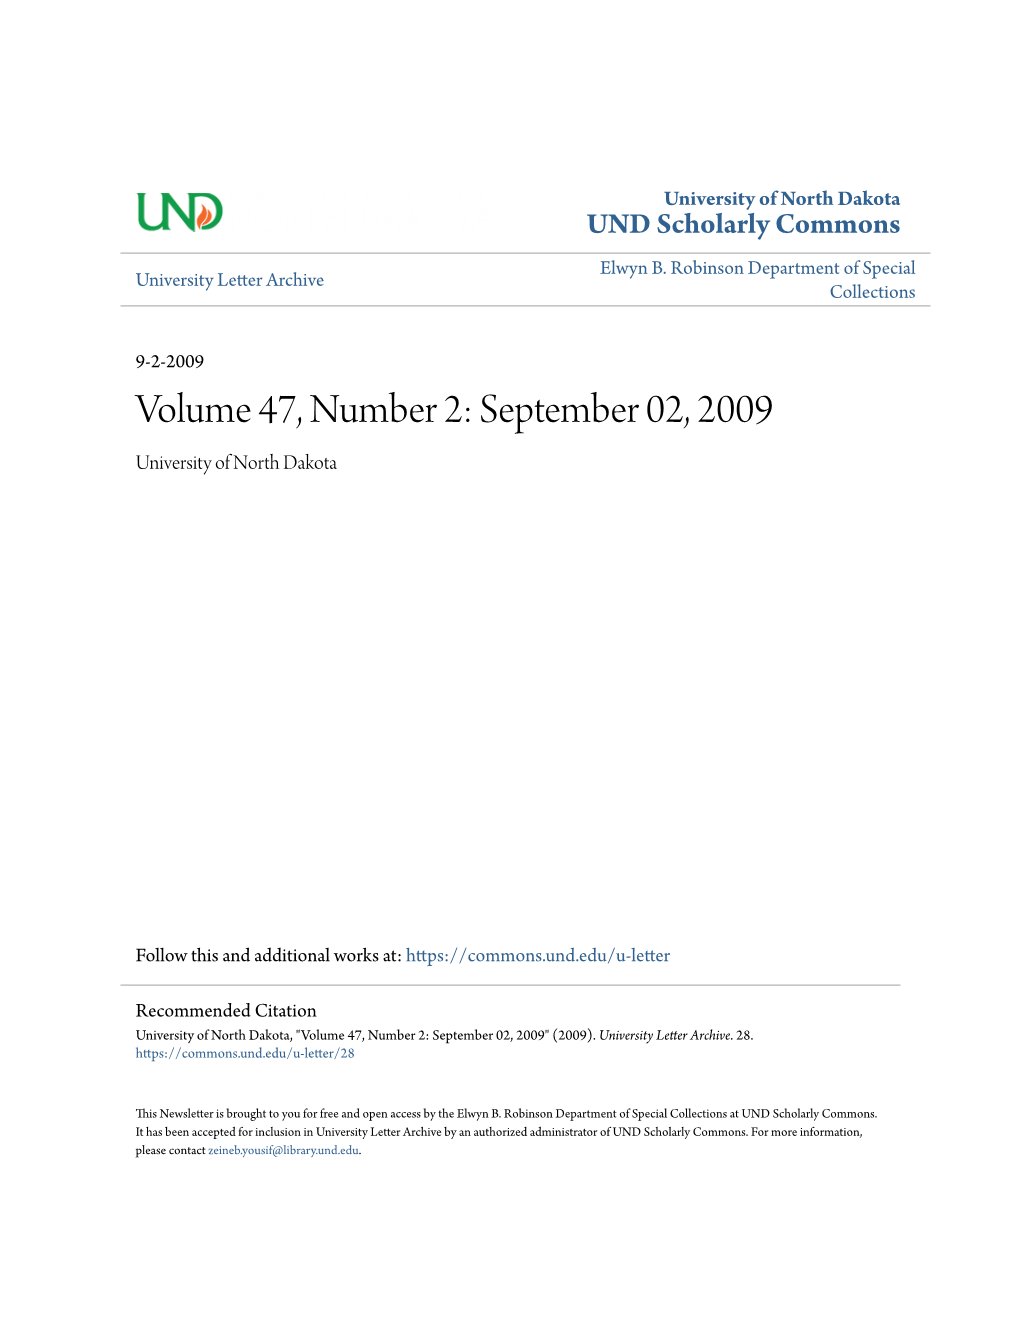 Volume 47, Number 2: September 02, 2009 University of North Dakota